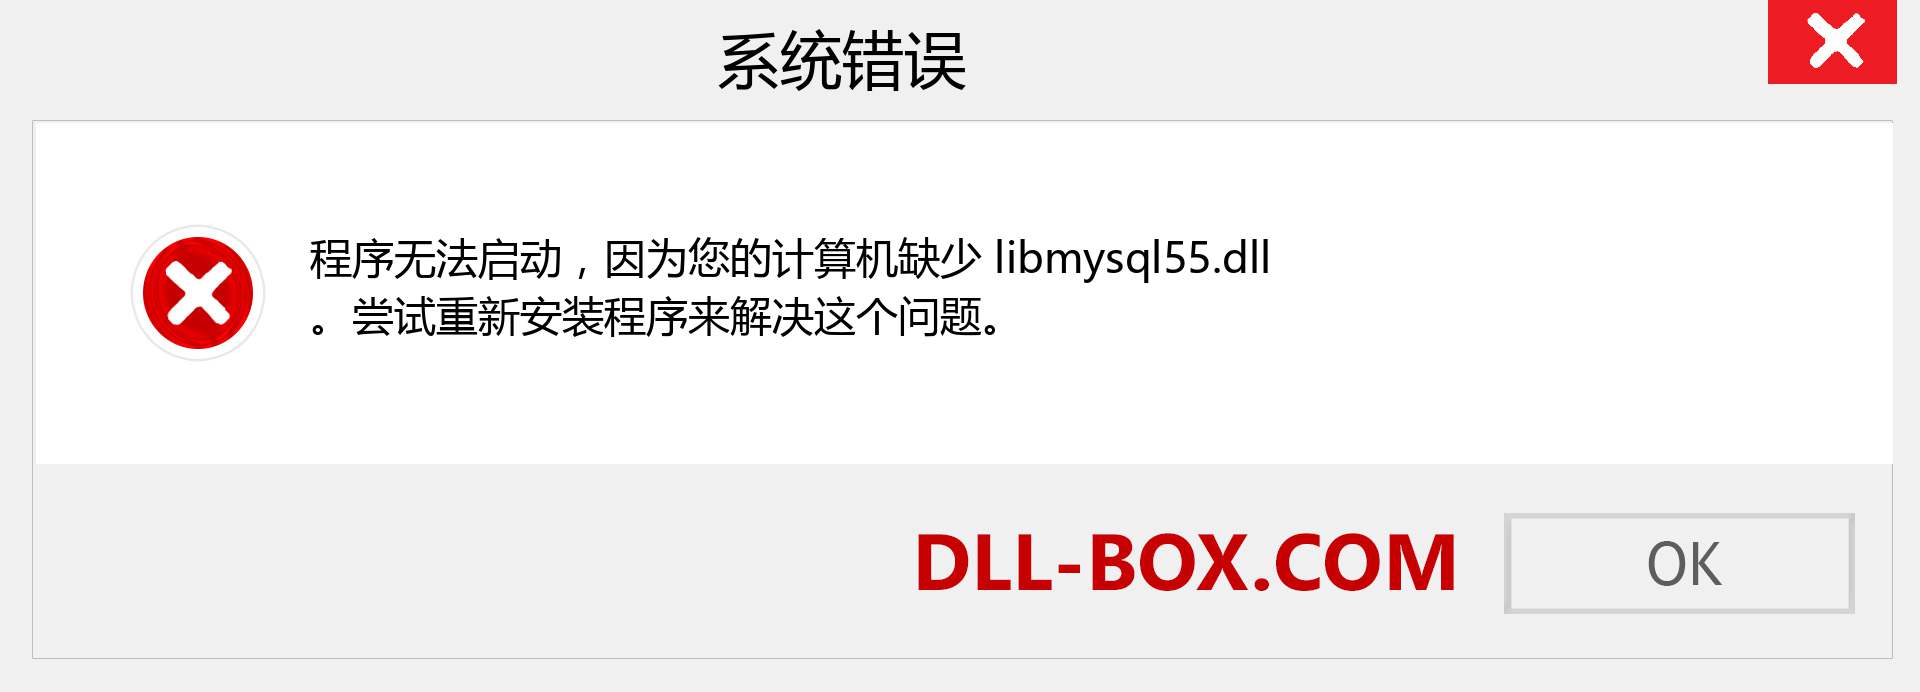 libmysql55.dll 文件丢失？。 适用于 Windows 7、8、10 的下载 - 修复 Windows、照片、图像上的 libmysql55 dll 丢失错误